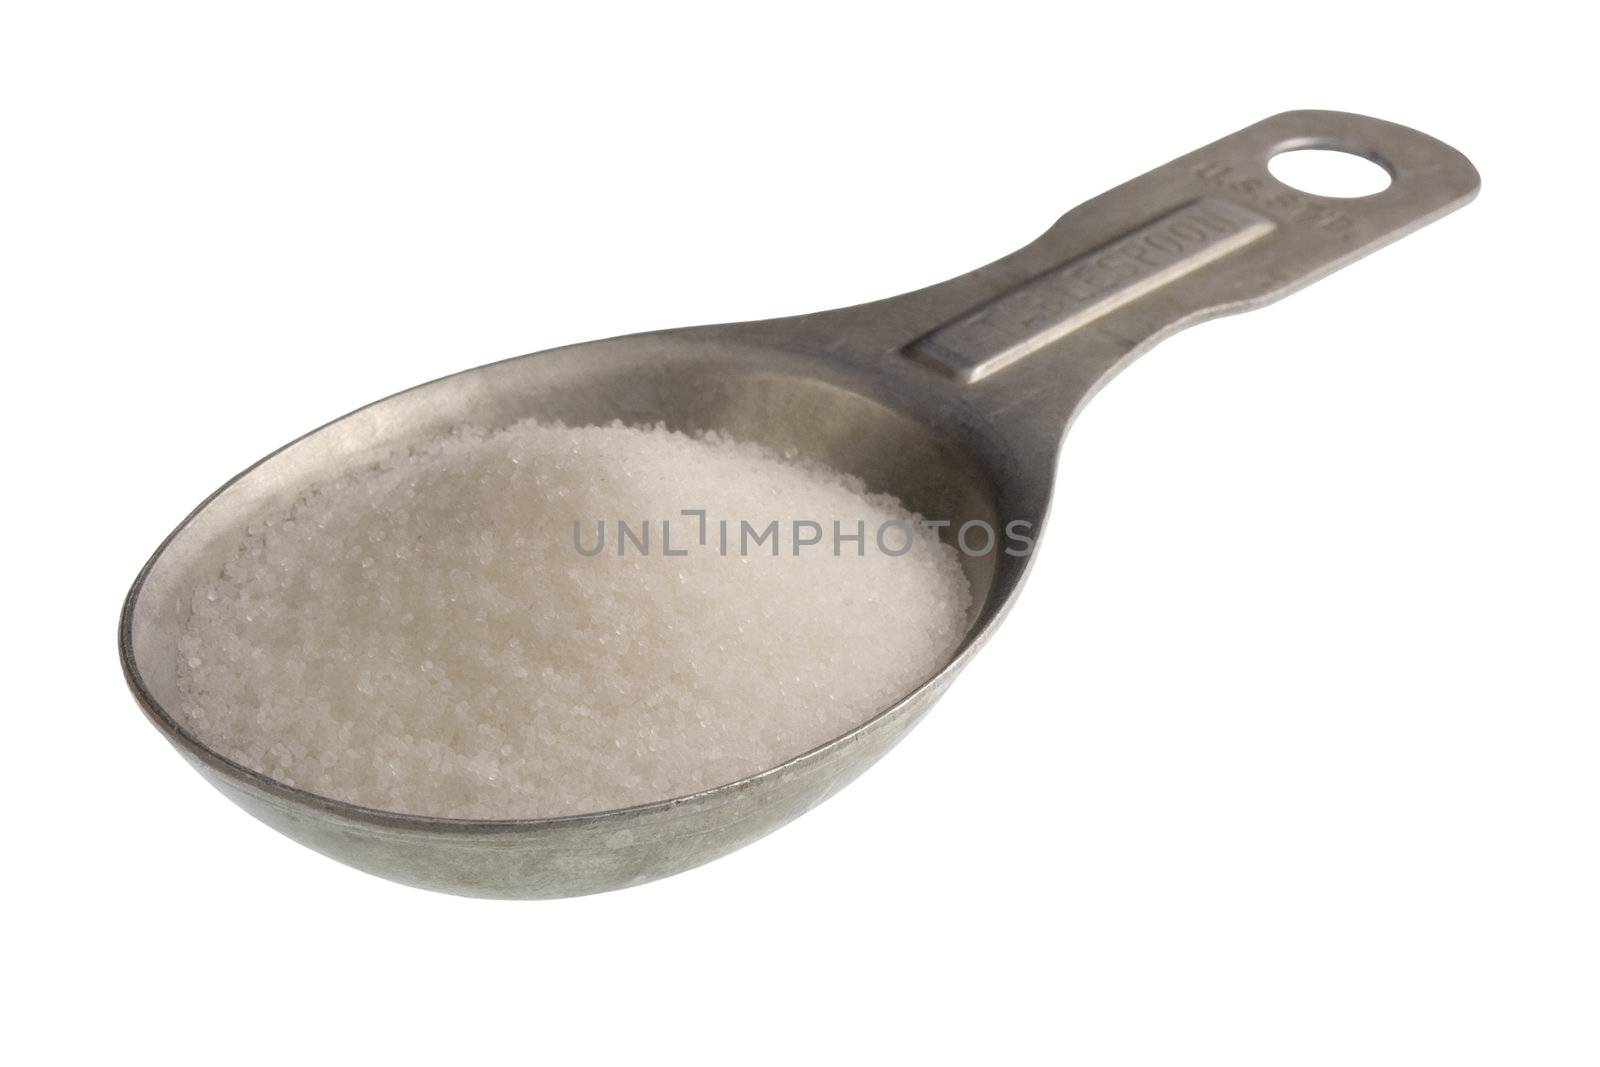 tablespoon of salt by PixelsAway